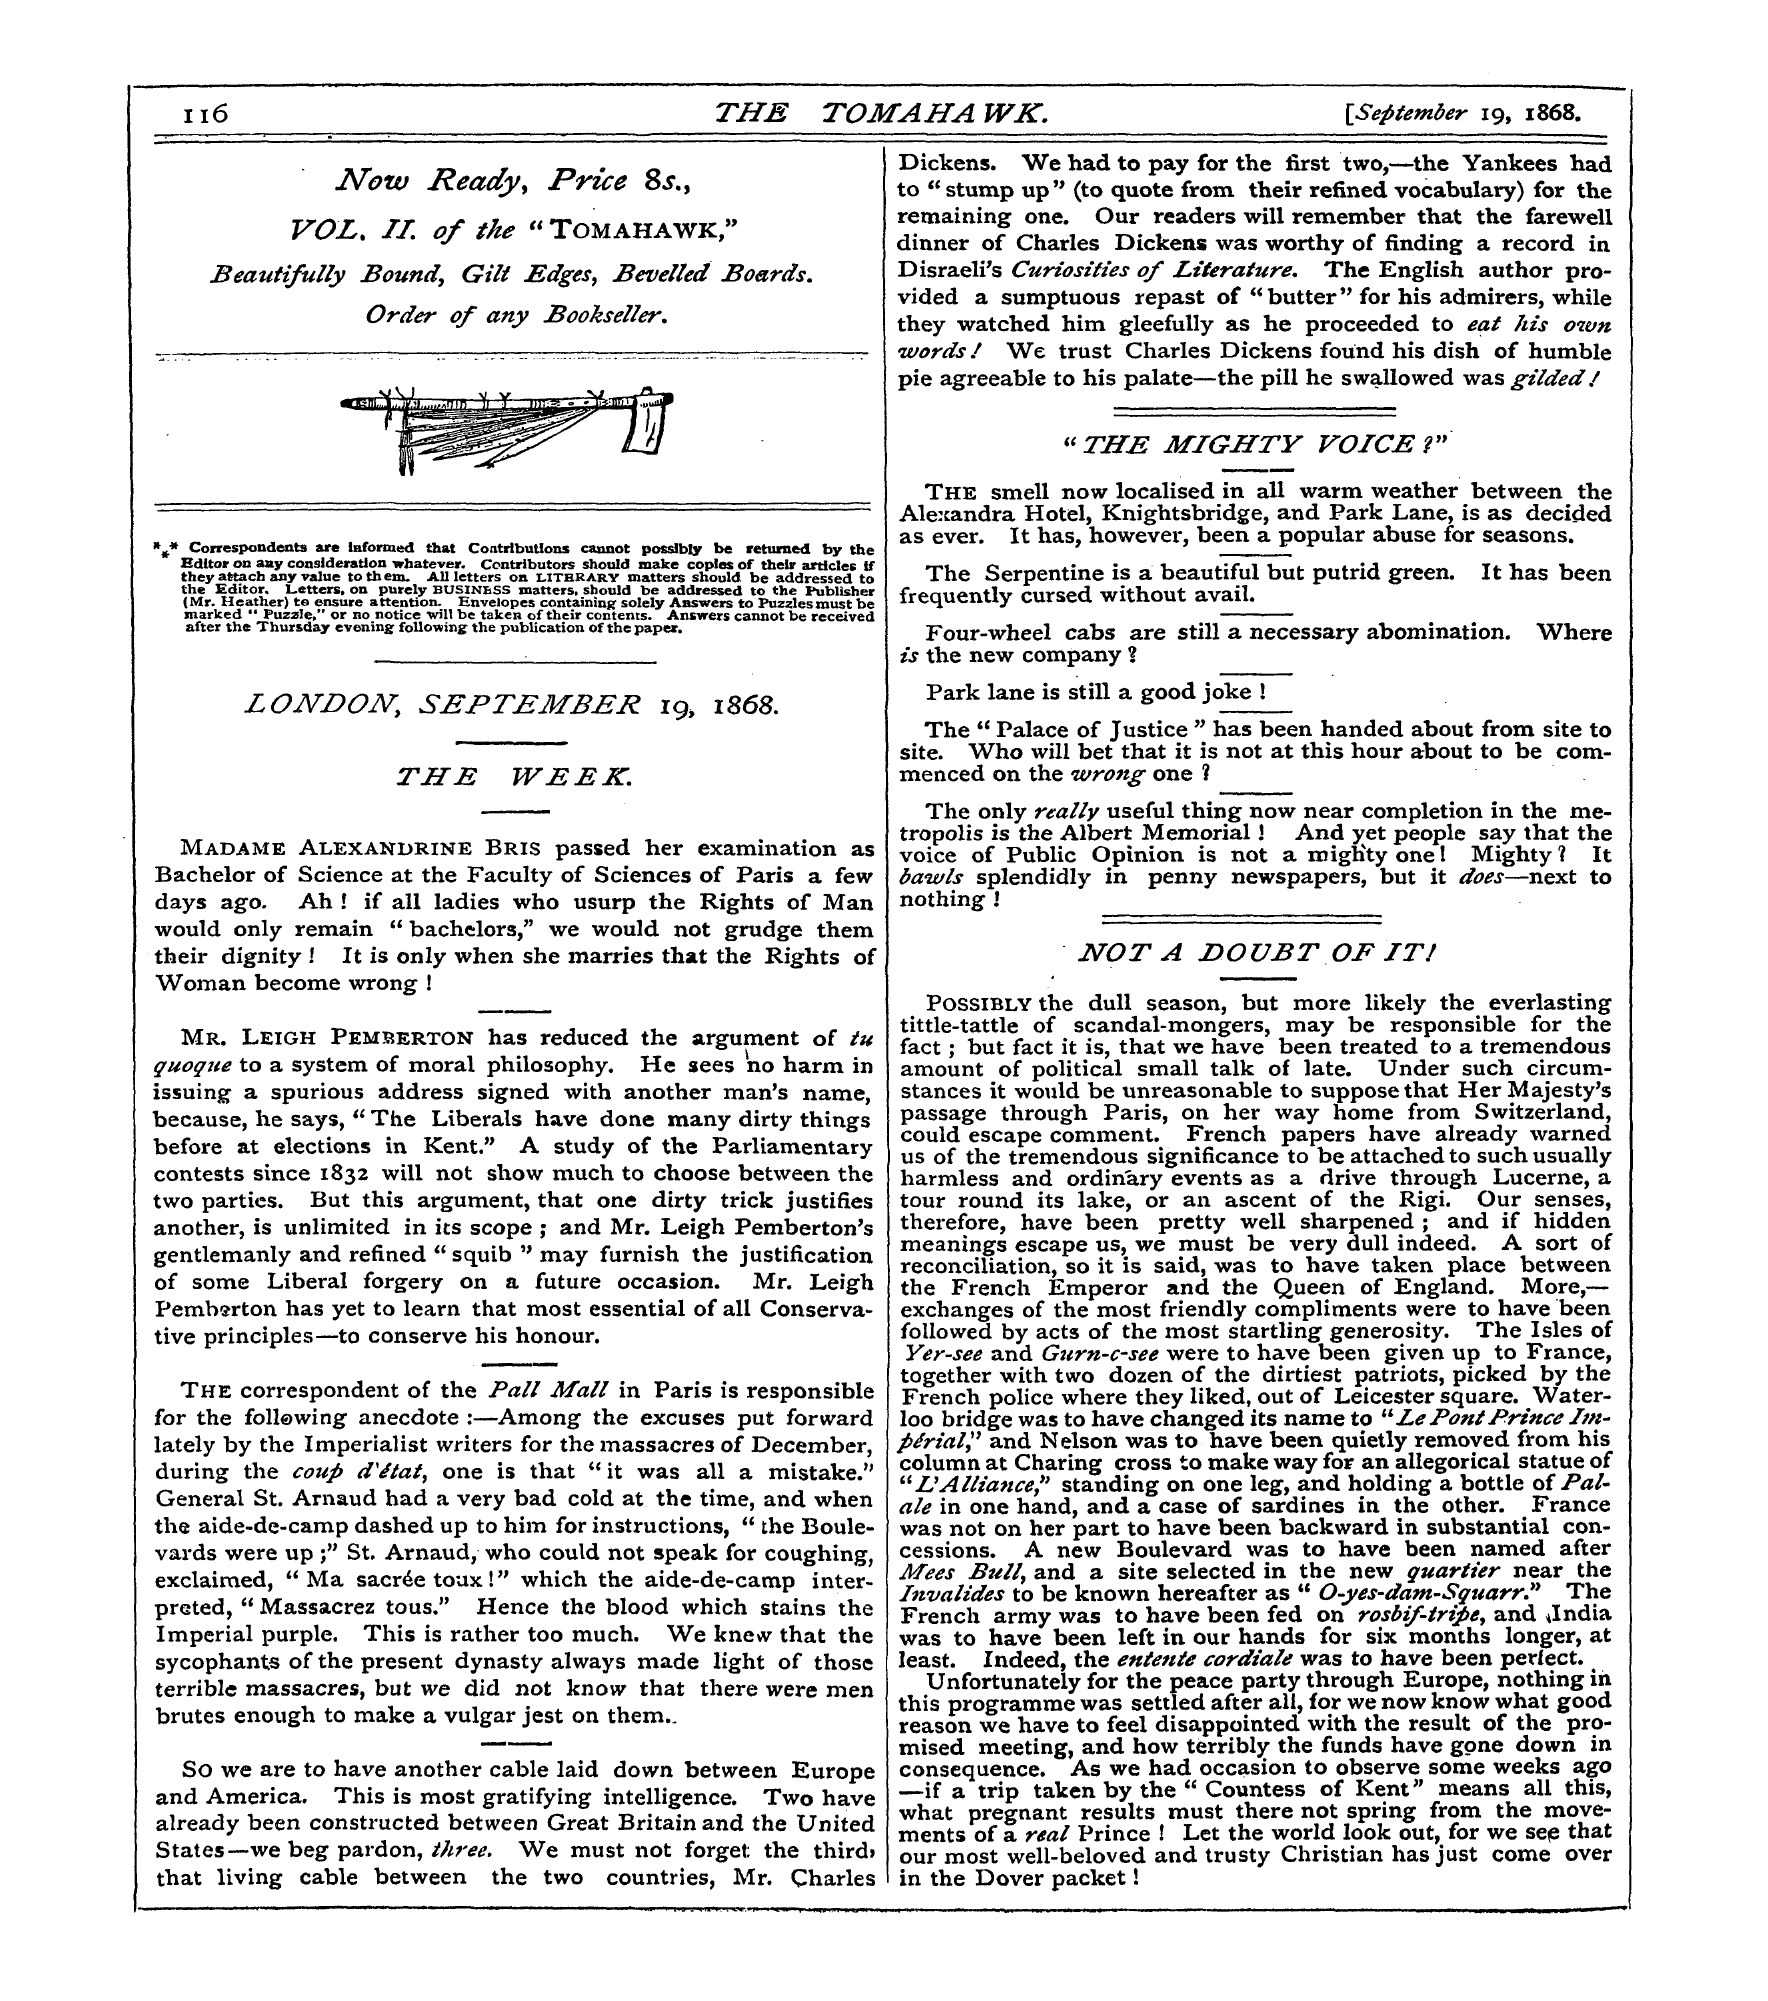 Tomahawk (1867-1870): jS F Y, 1st edition - London, September 19, 1868.